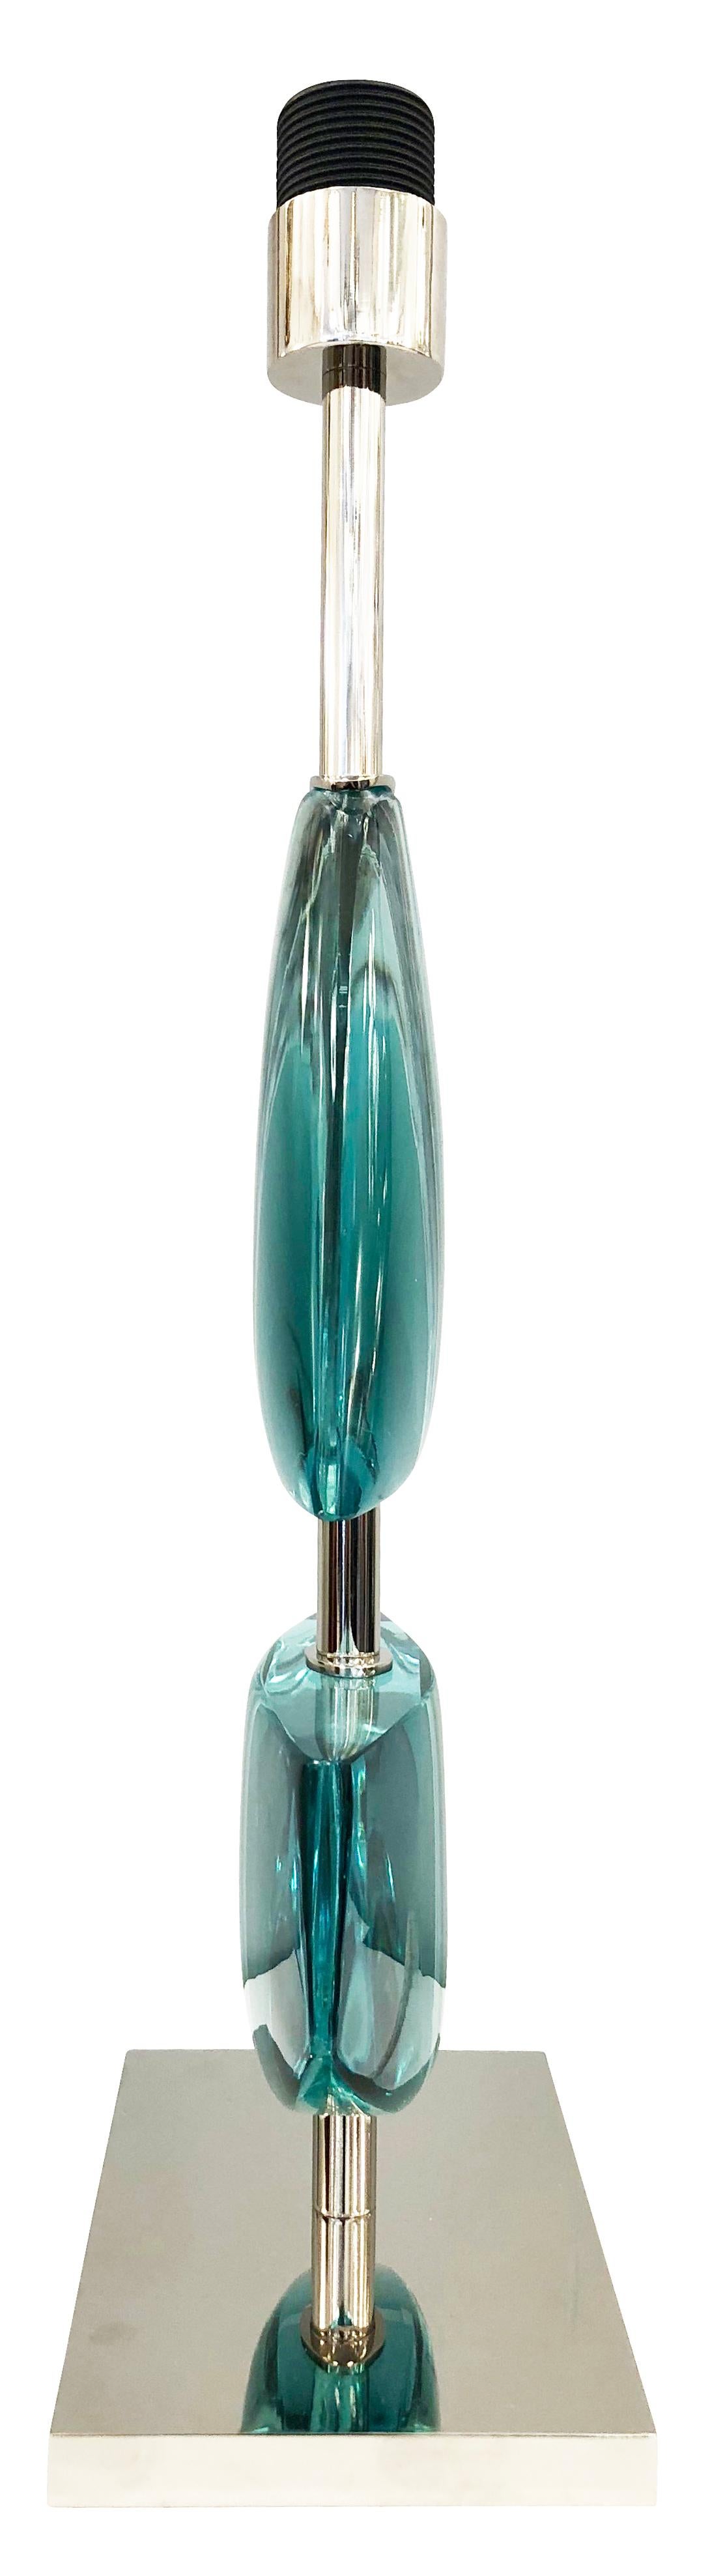 Italian Vela Table Lamp by Effetto Vetro for Gaspare Asaro For Sale